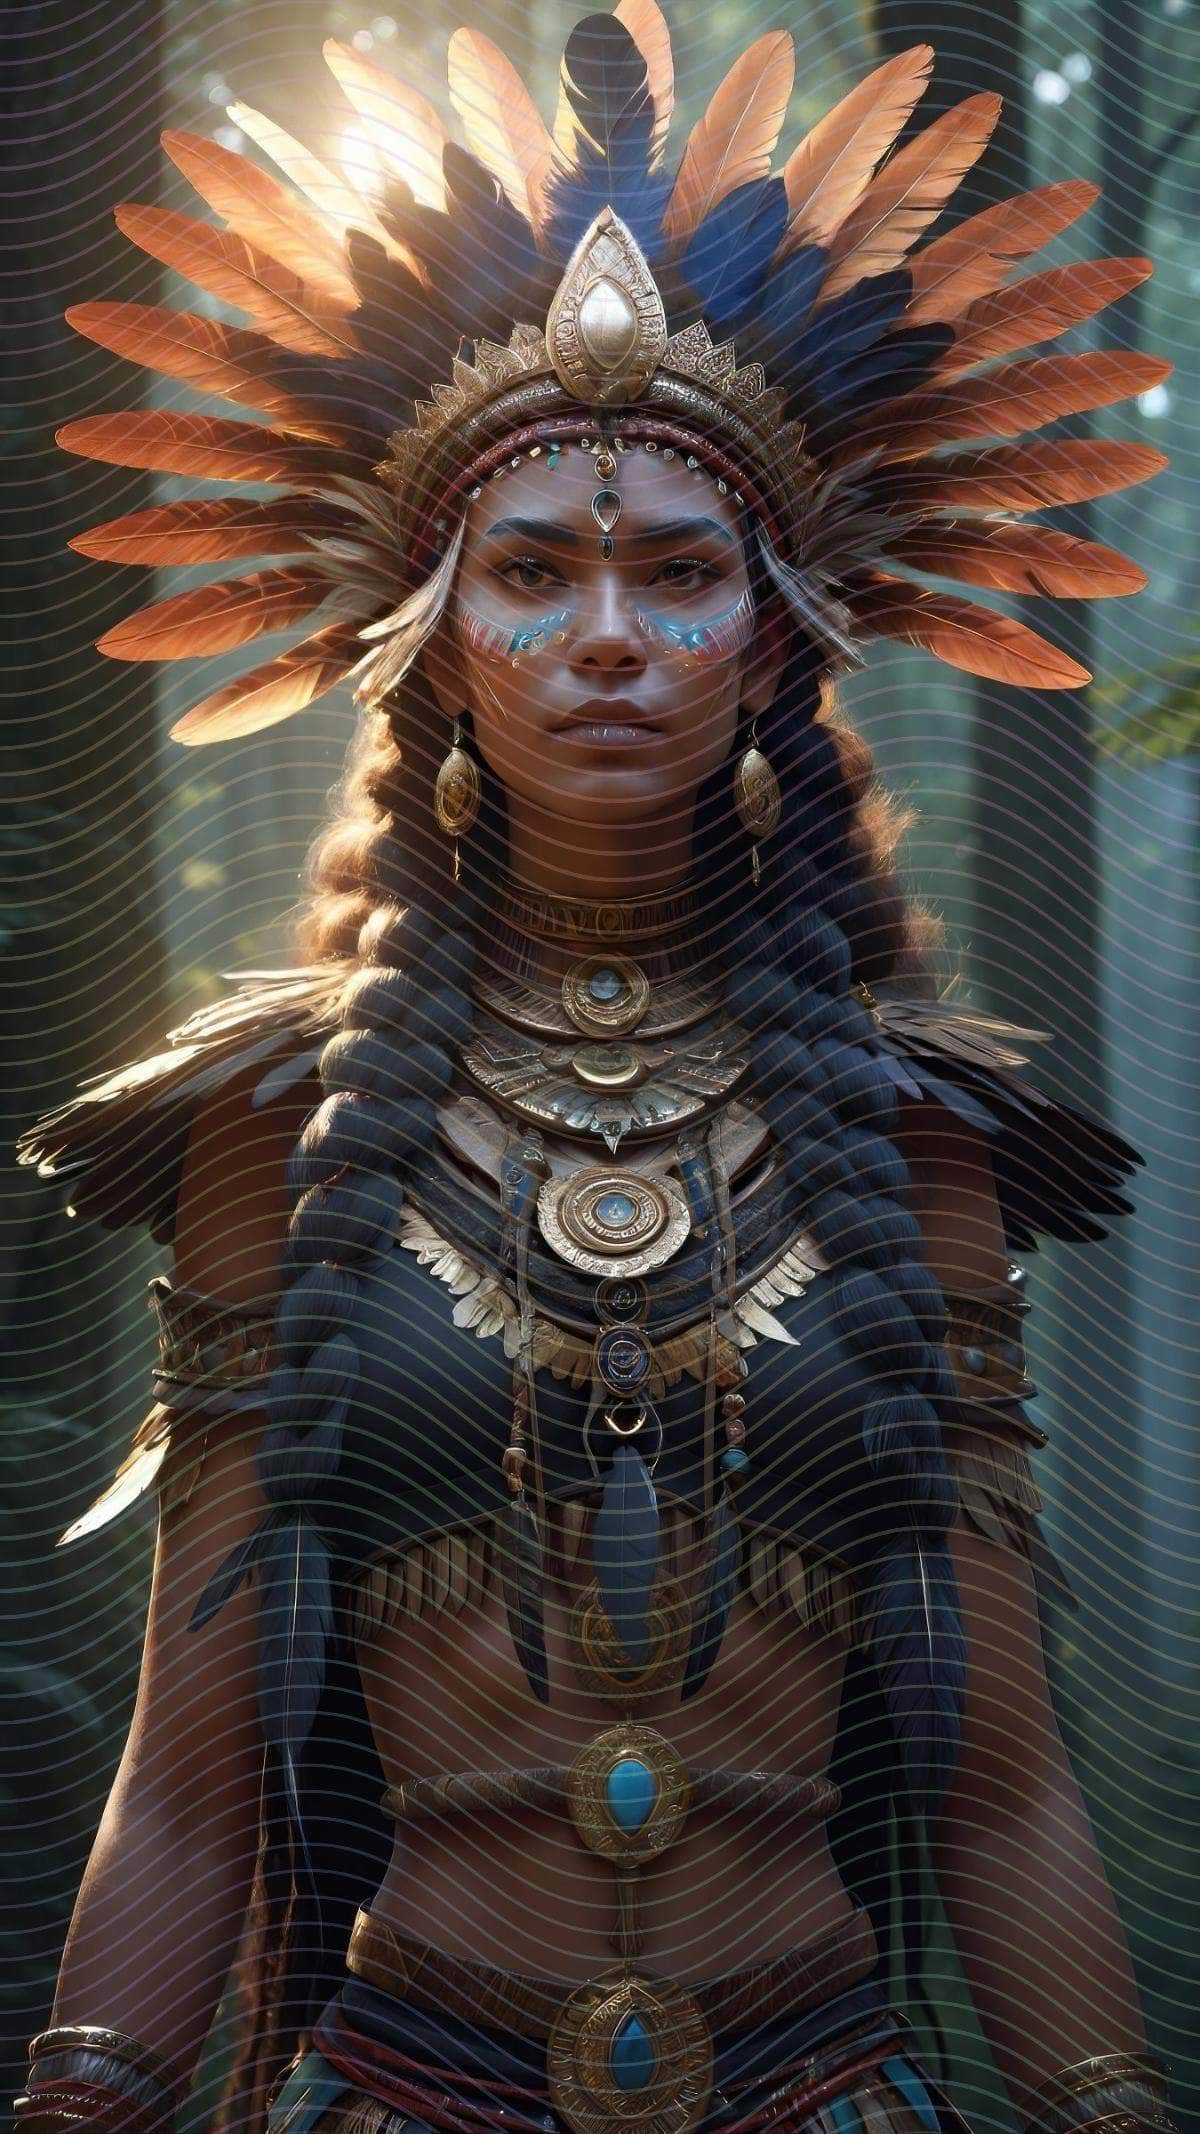 A Beautiful Tribal Woman Queen